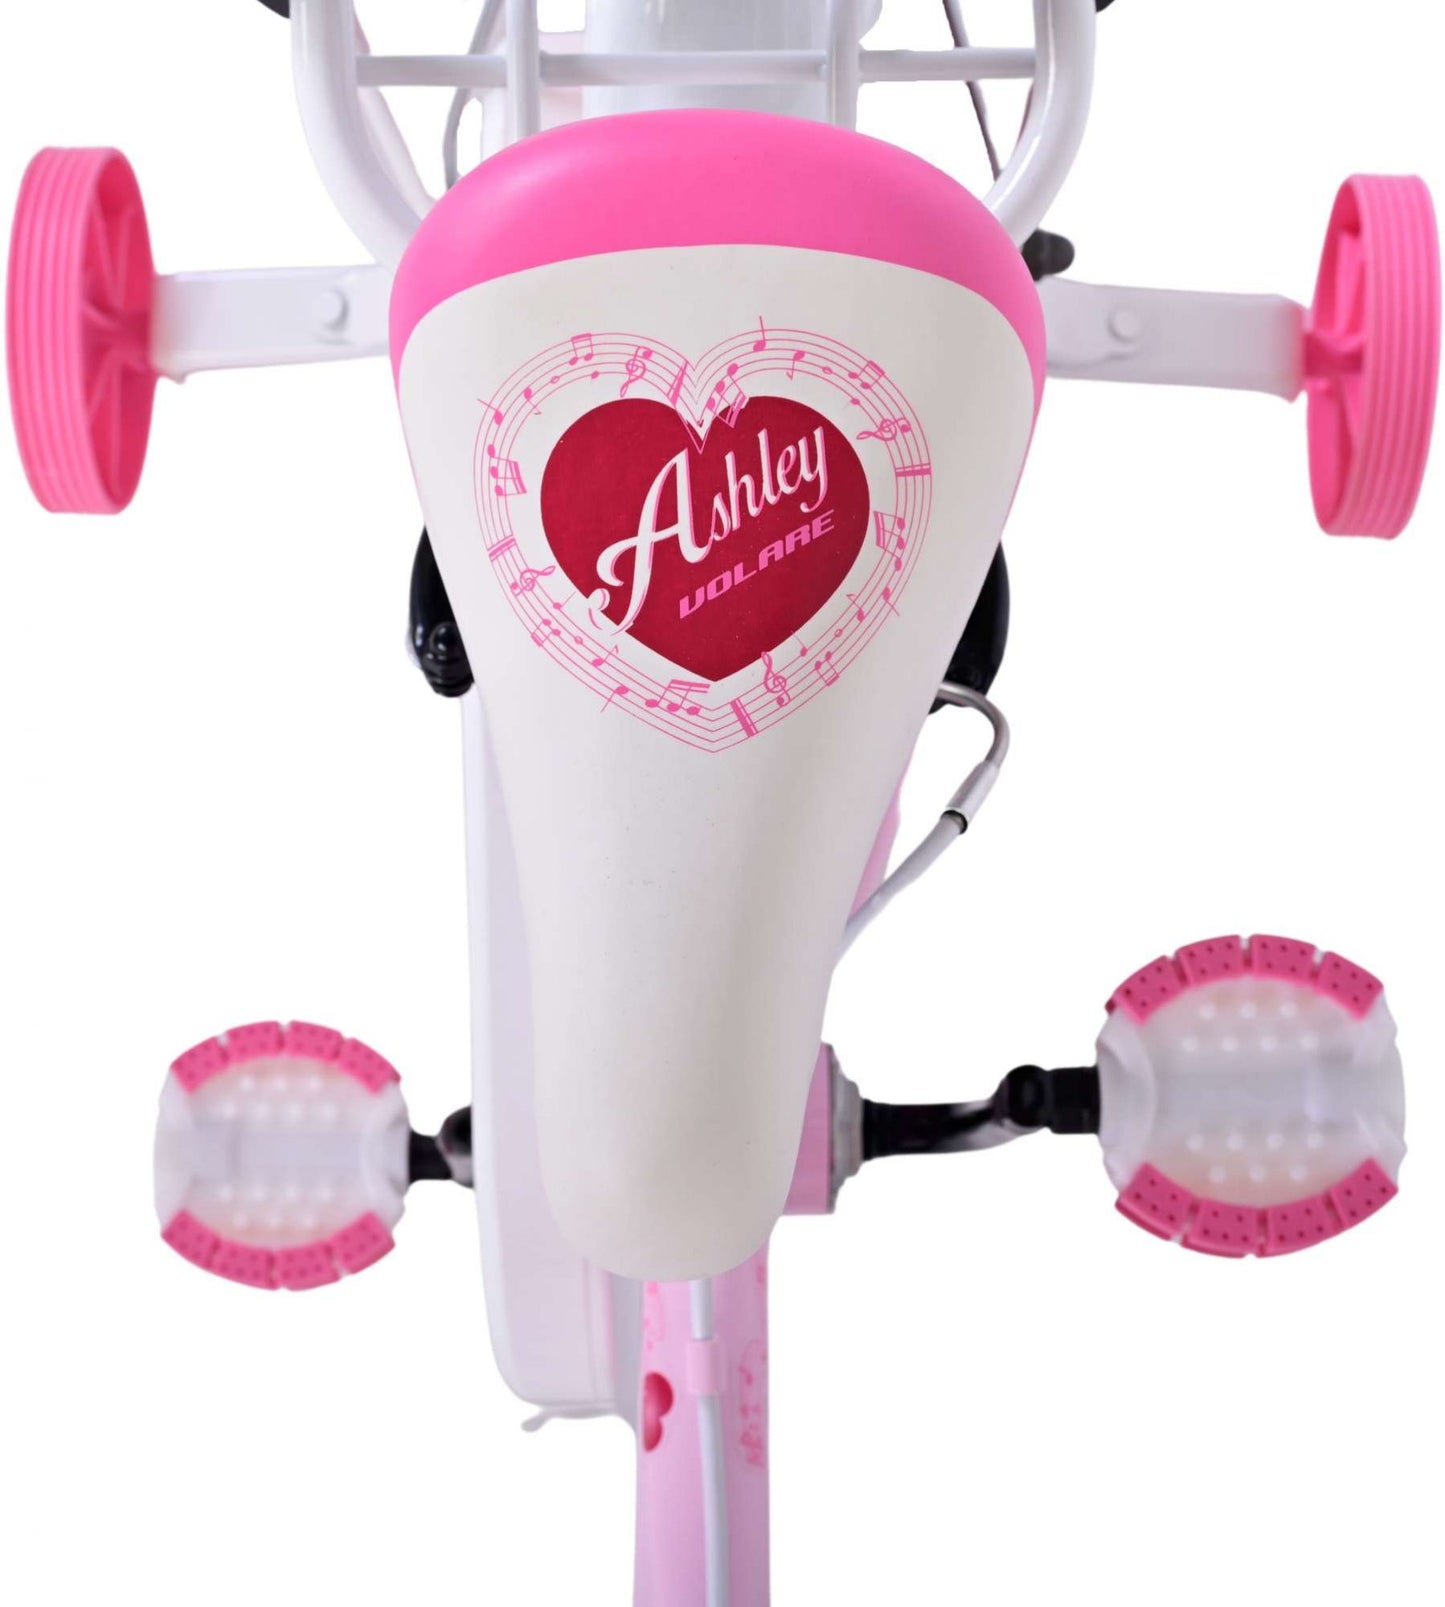 Bicicleta para niños de Vinare Ashley - Niñas - 14 pulgadas - Pink - Dos frenos de mano